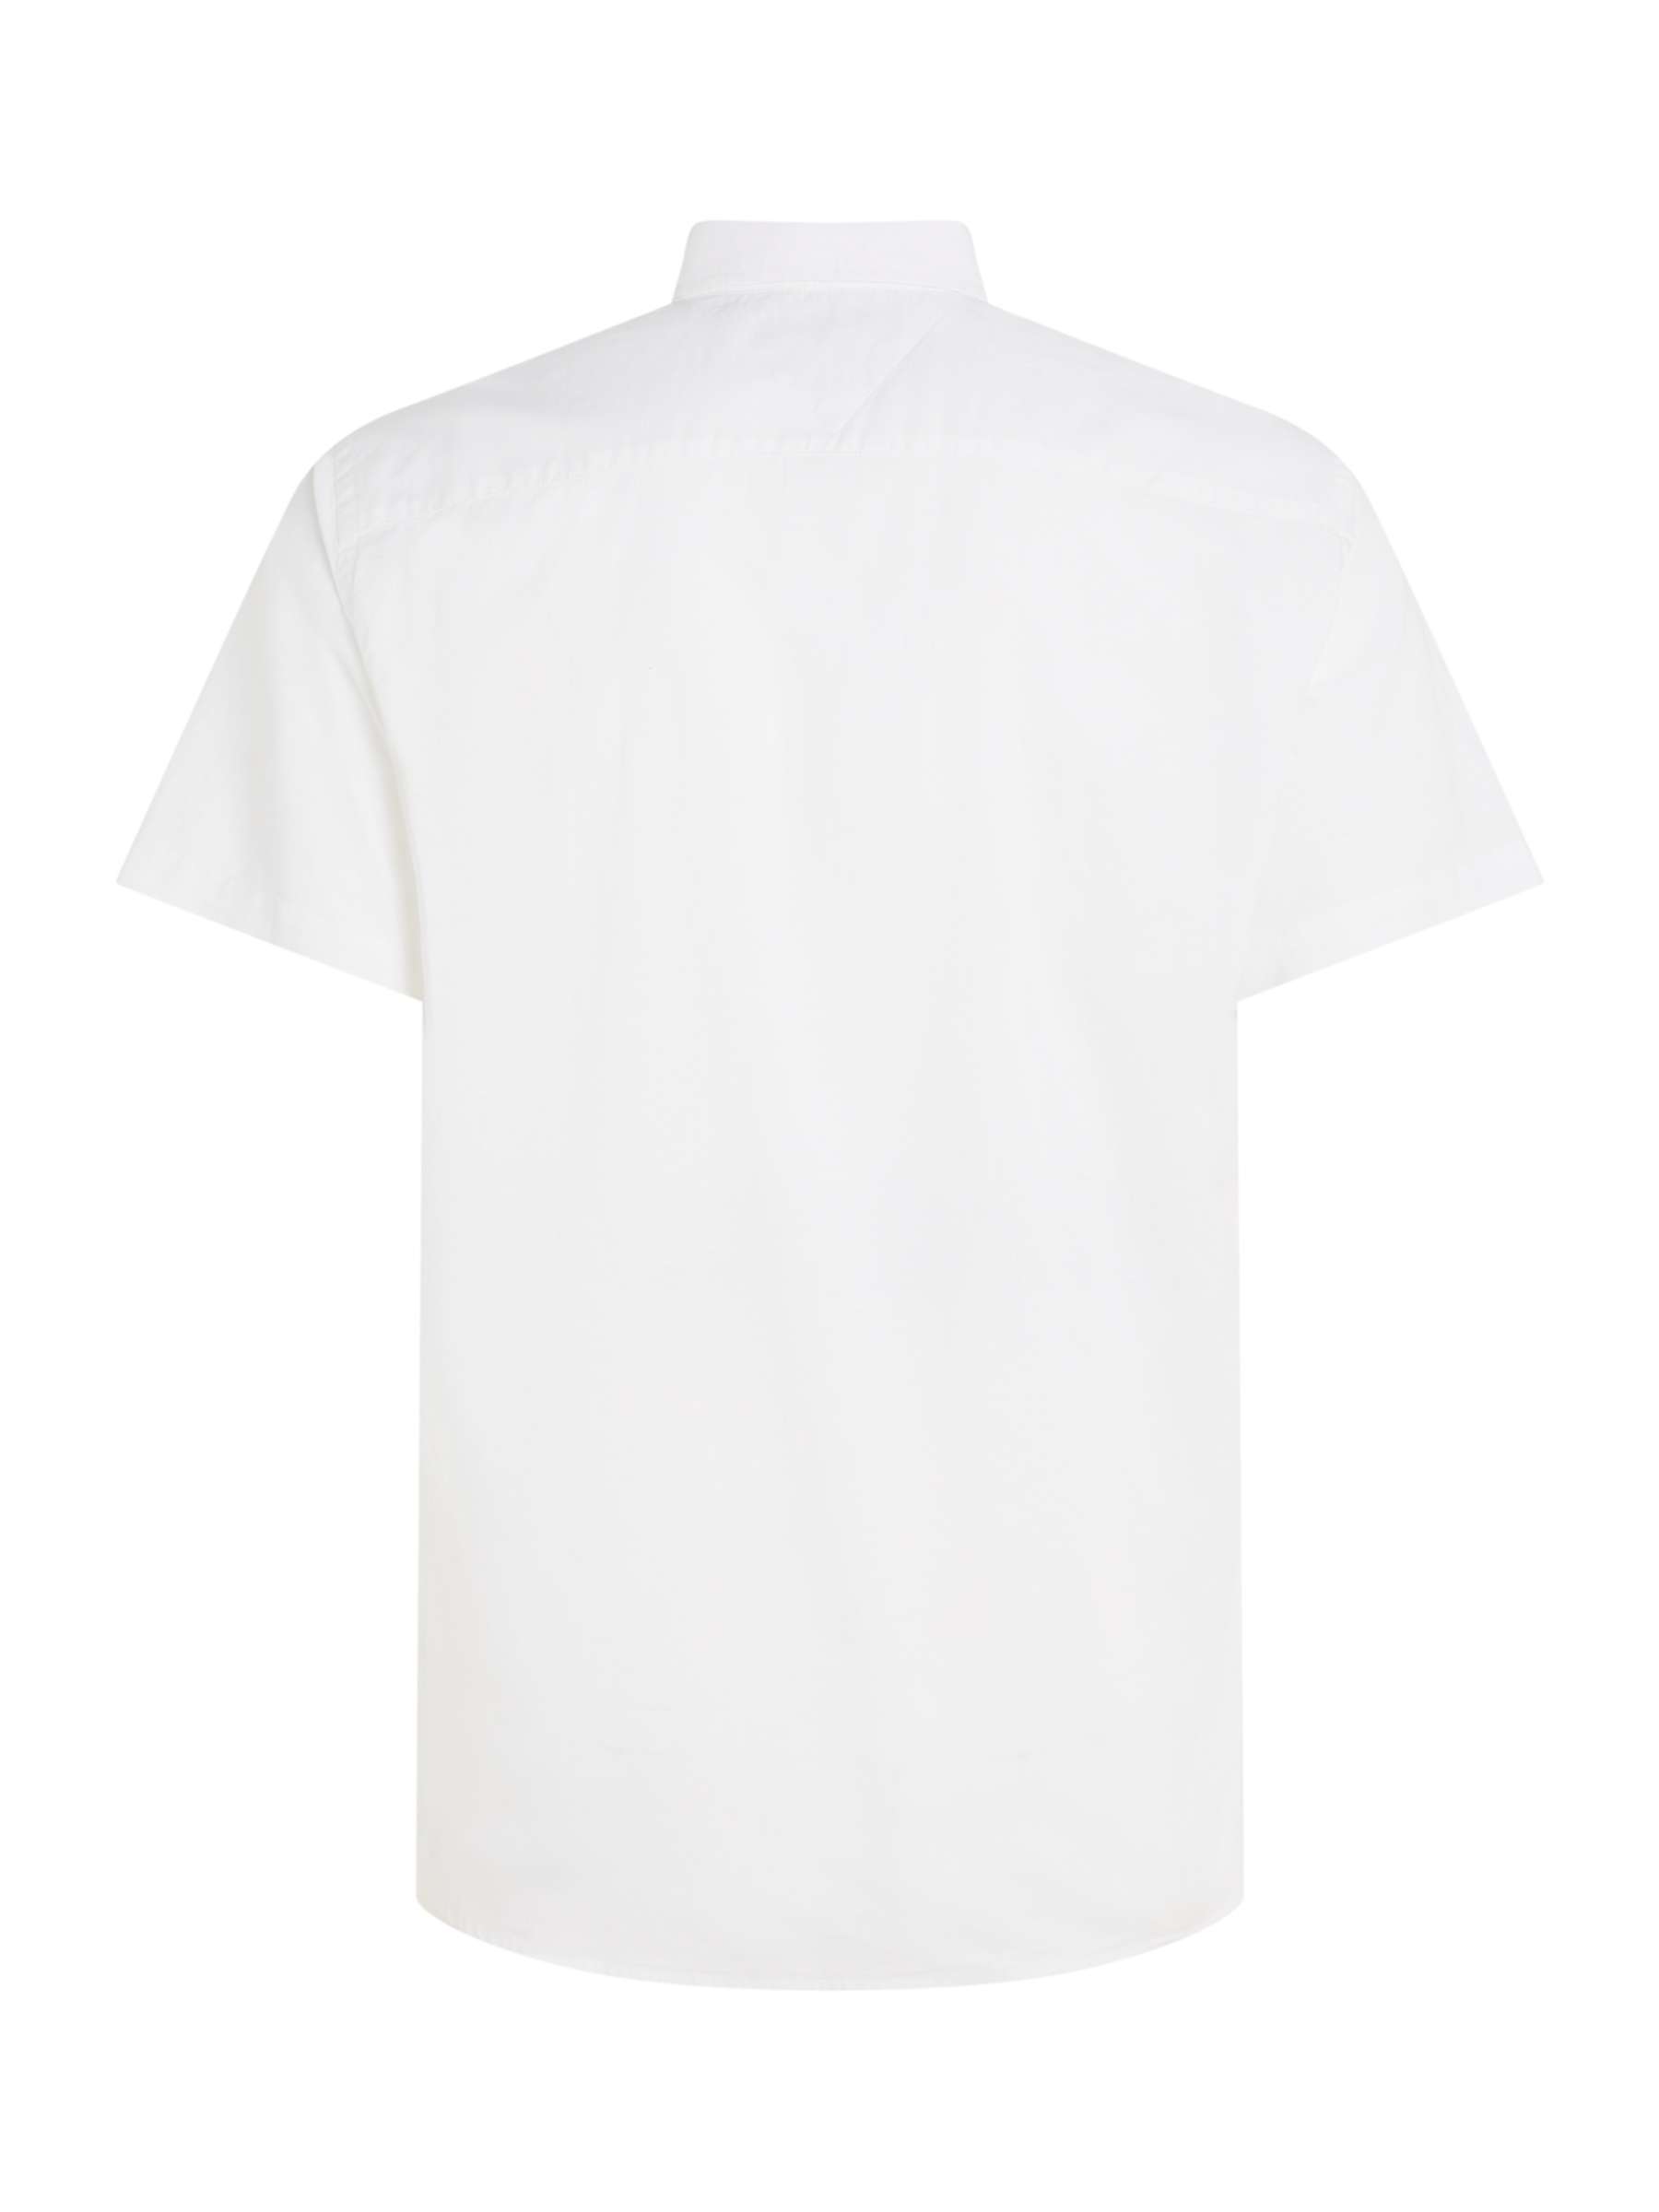 Tommy Hilfiger Linen Short Sleeve Shirt, White at John Lewis & Partners